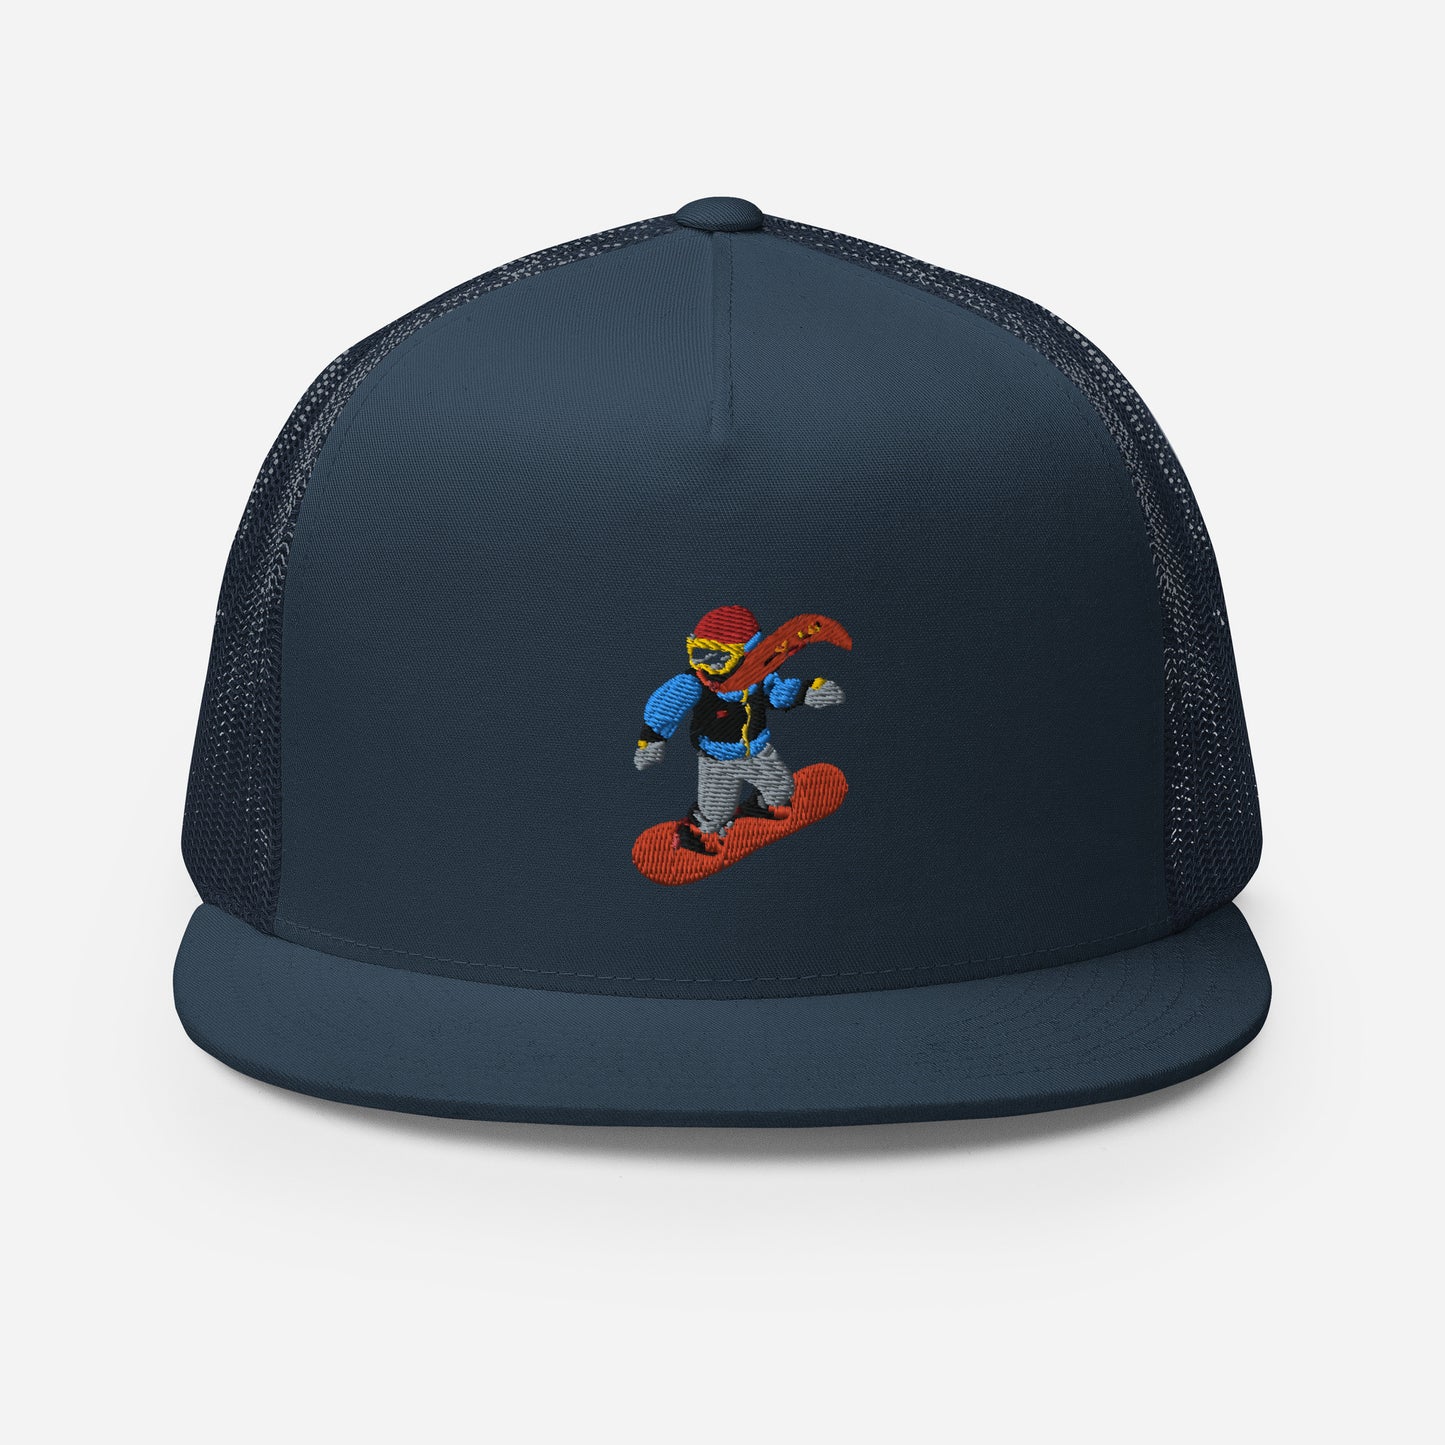 blue snowboard emoji hat